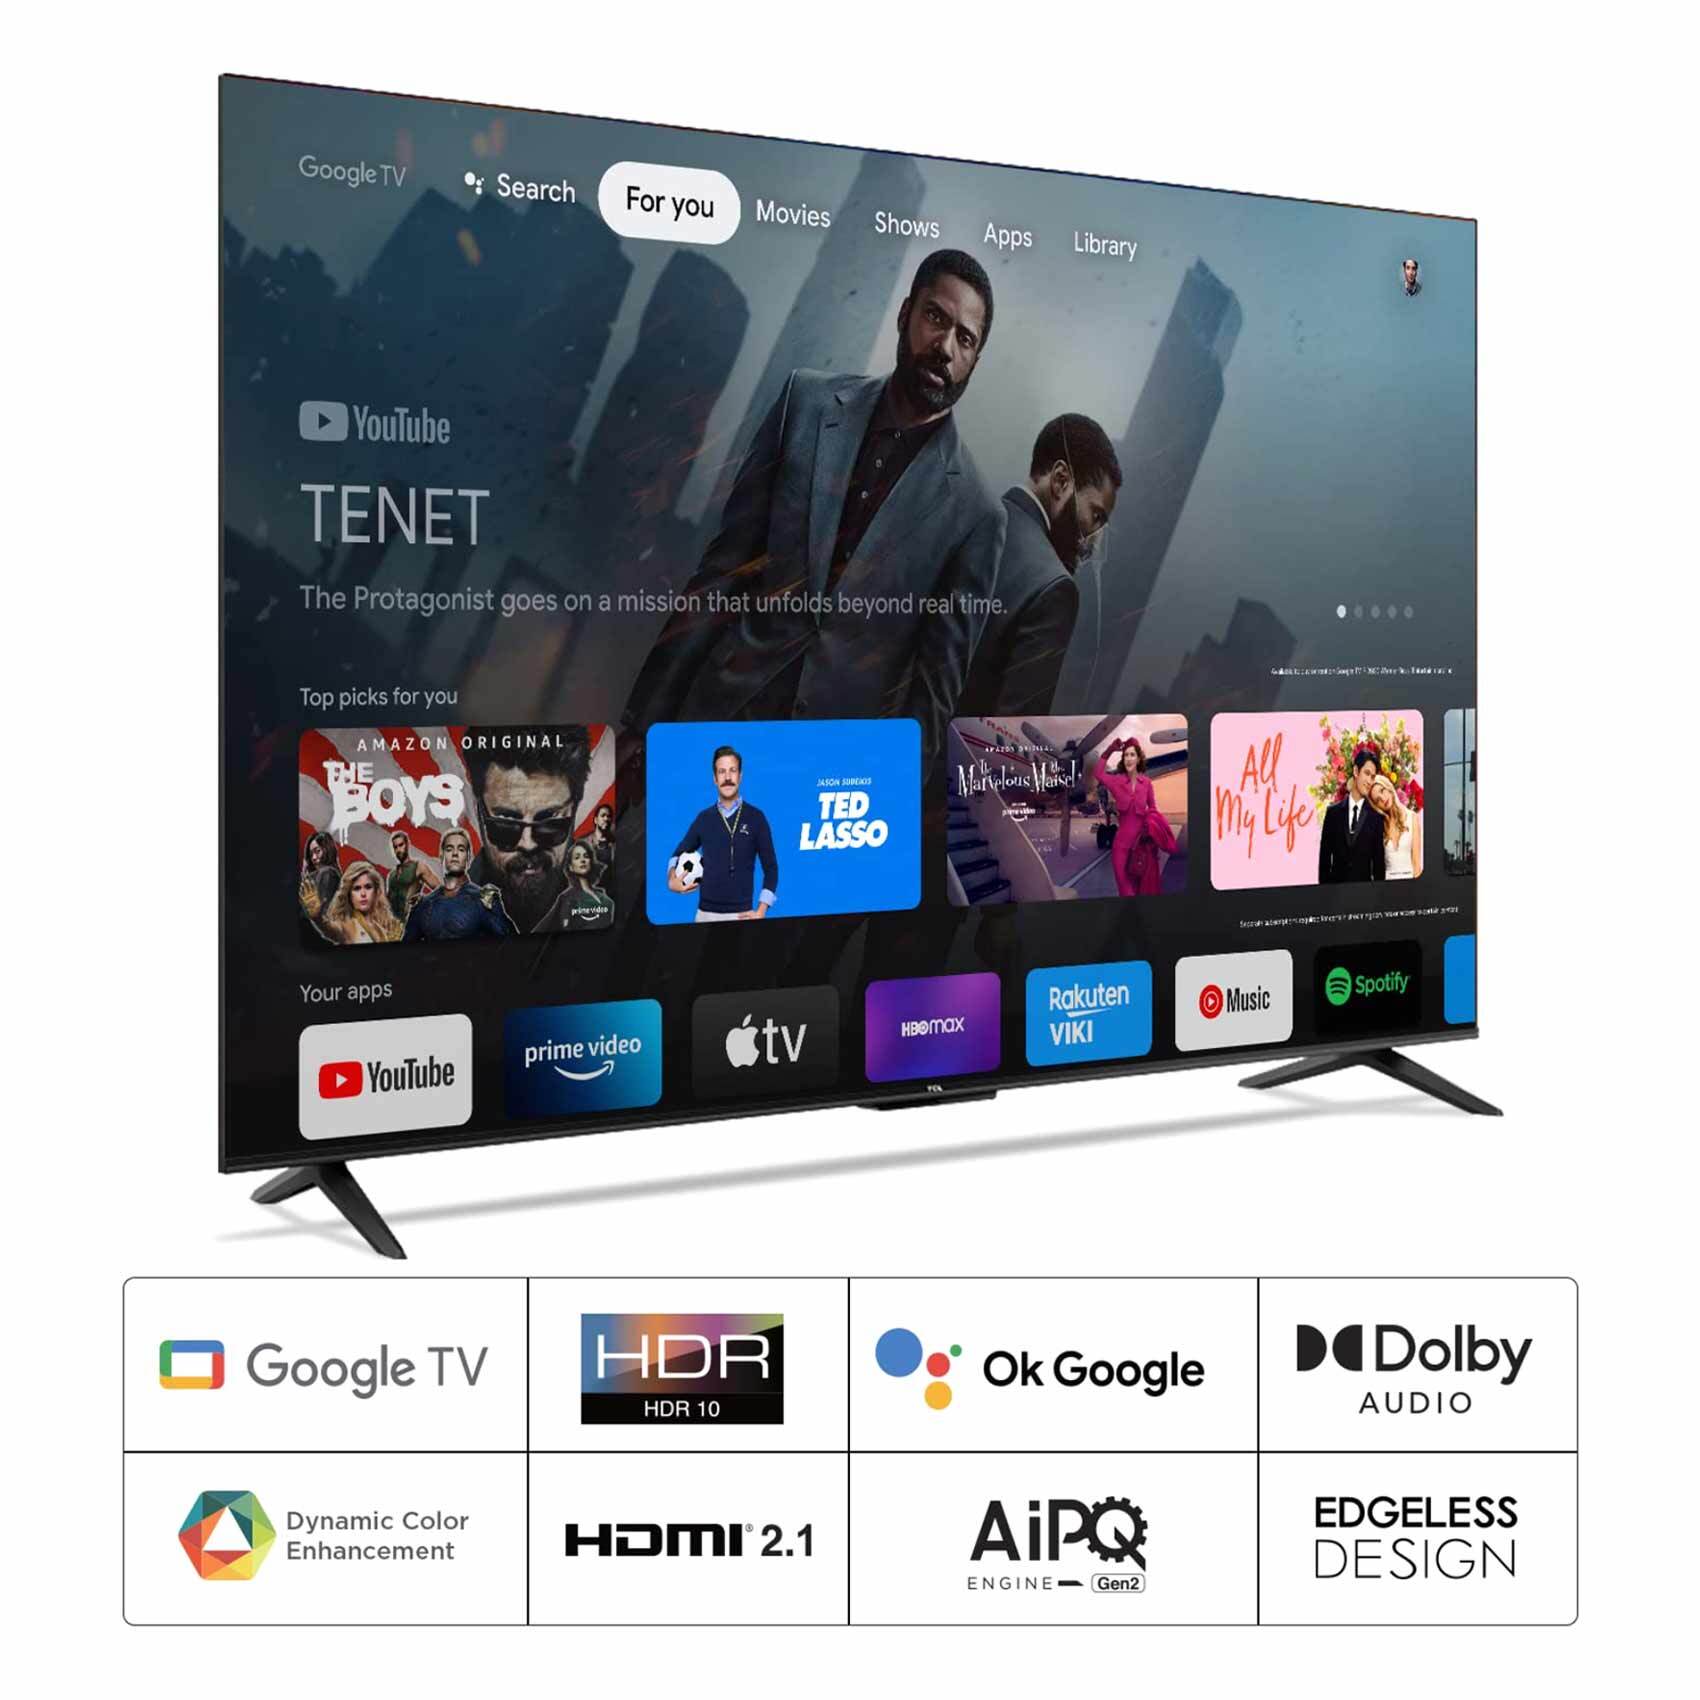 Buy Tcl 43 43P635 4K Smart Uhd Google Tv New Online - Carrefour Kenya